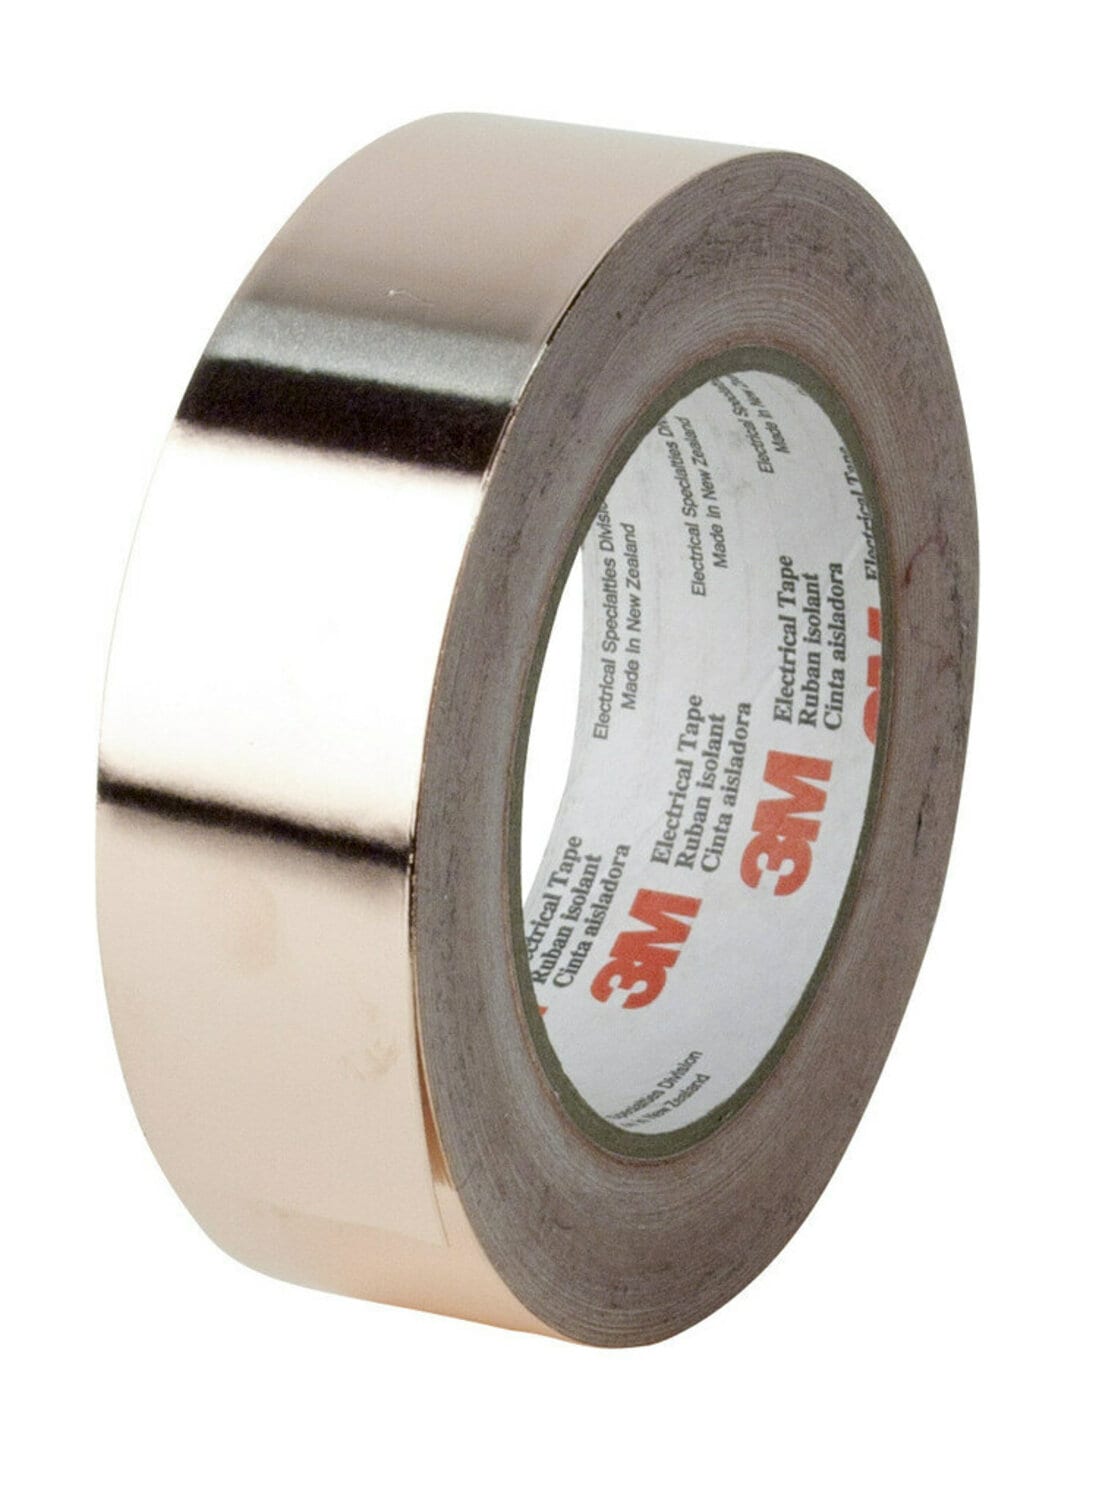 7010320278 - 3M Copper Foil EMI Shielding Tape 1194, 1 in x 36 yd, 3 in Paper Core,
9 Rolls/Case